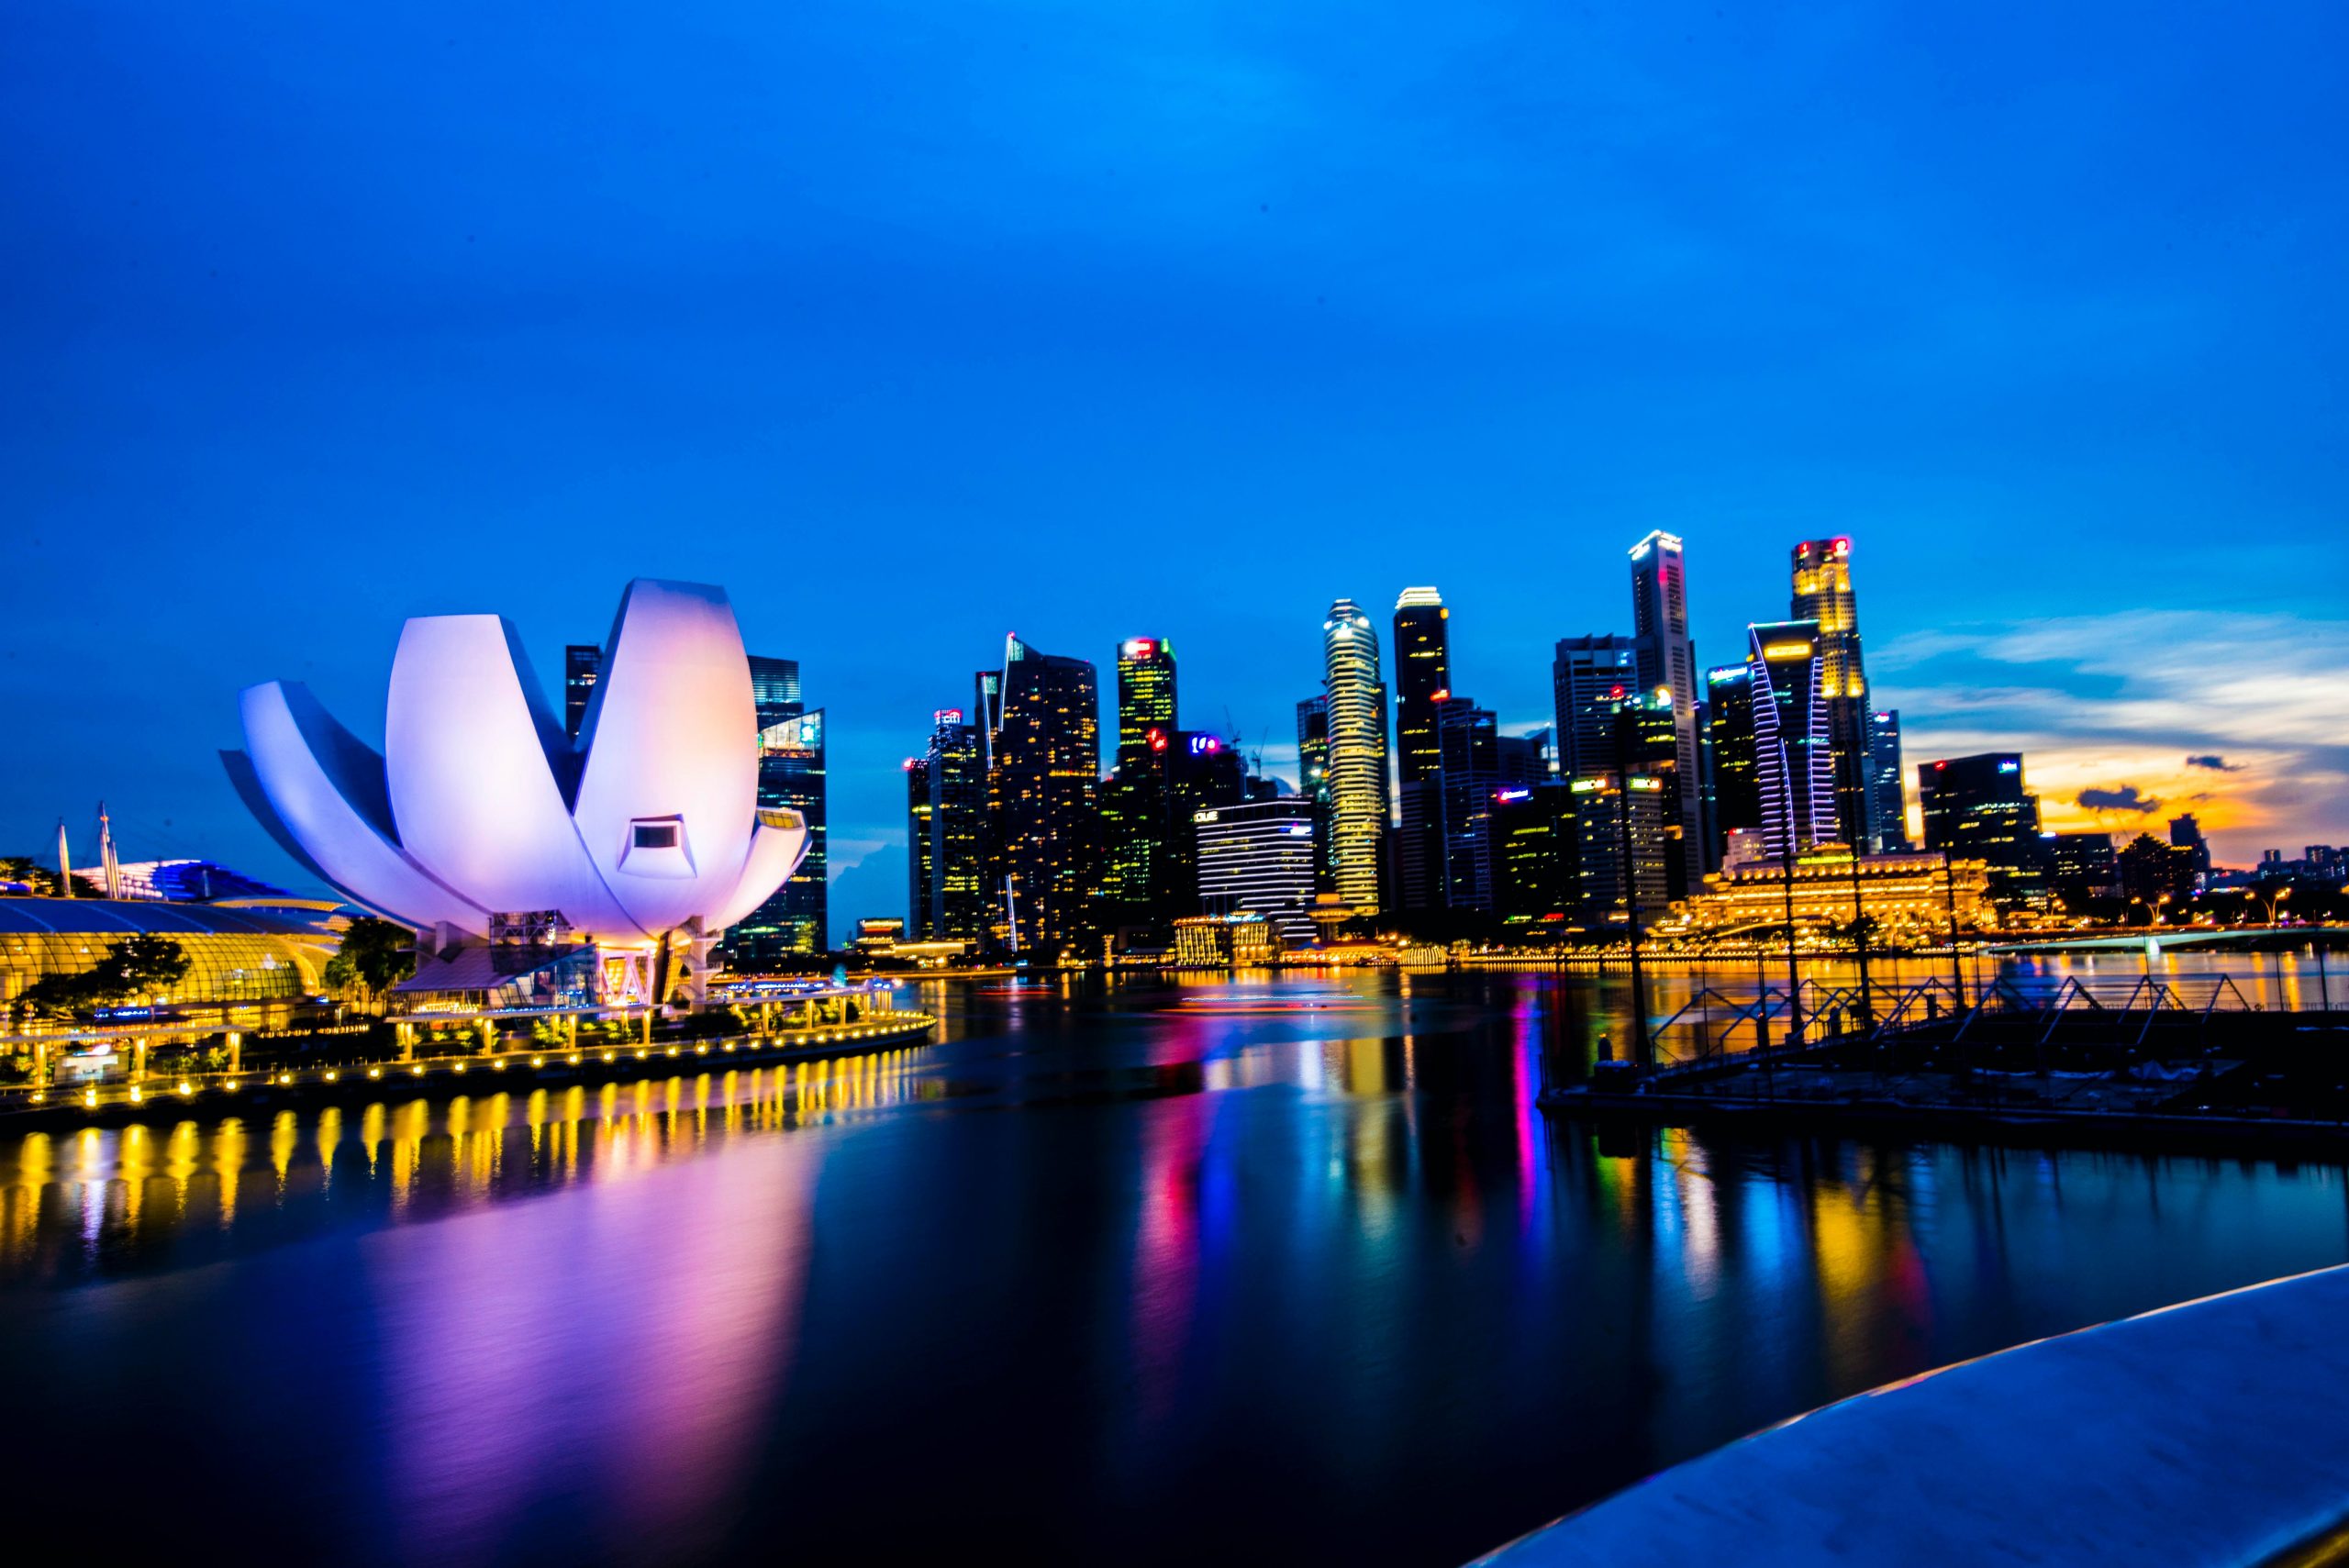 Singaporean Leaders in Public Service: 5 Ways They Progress Society